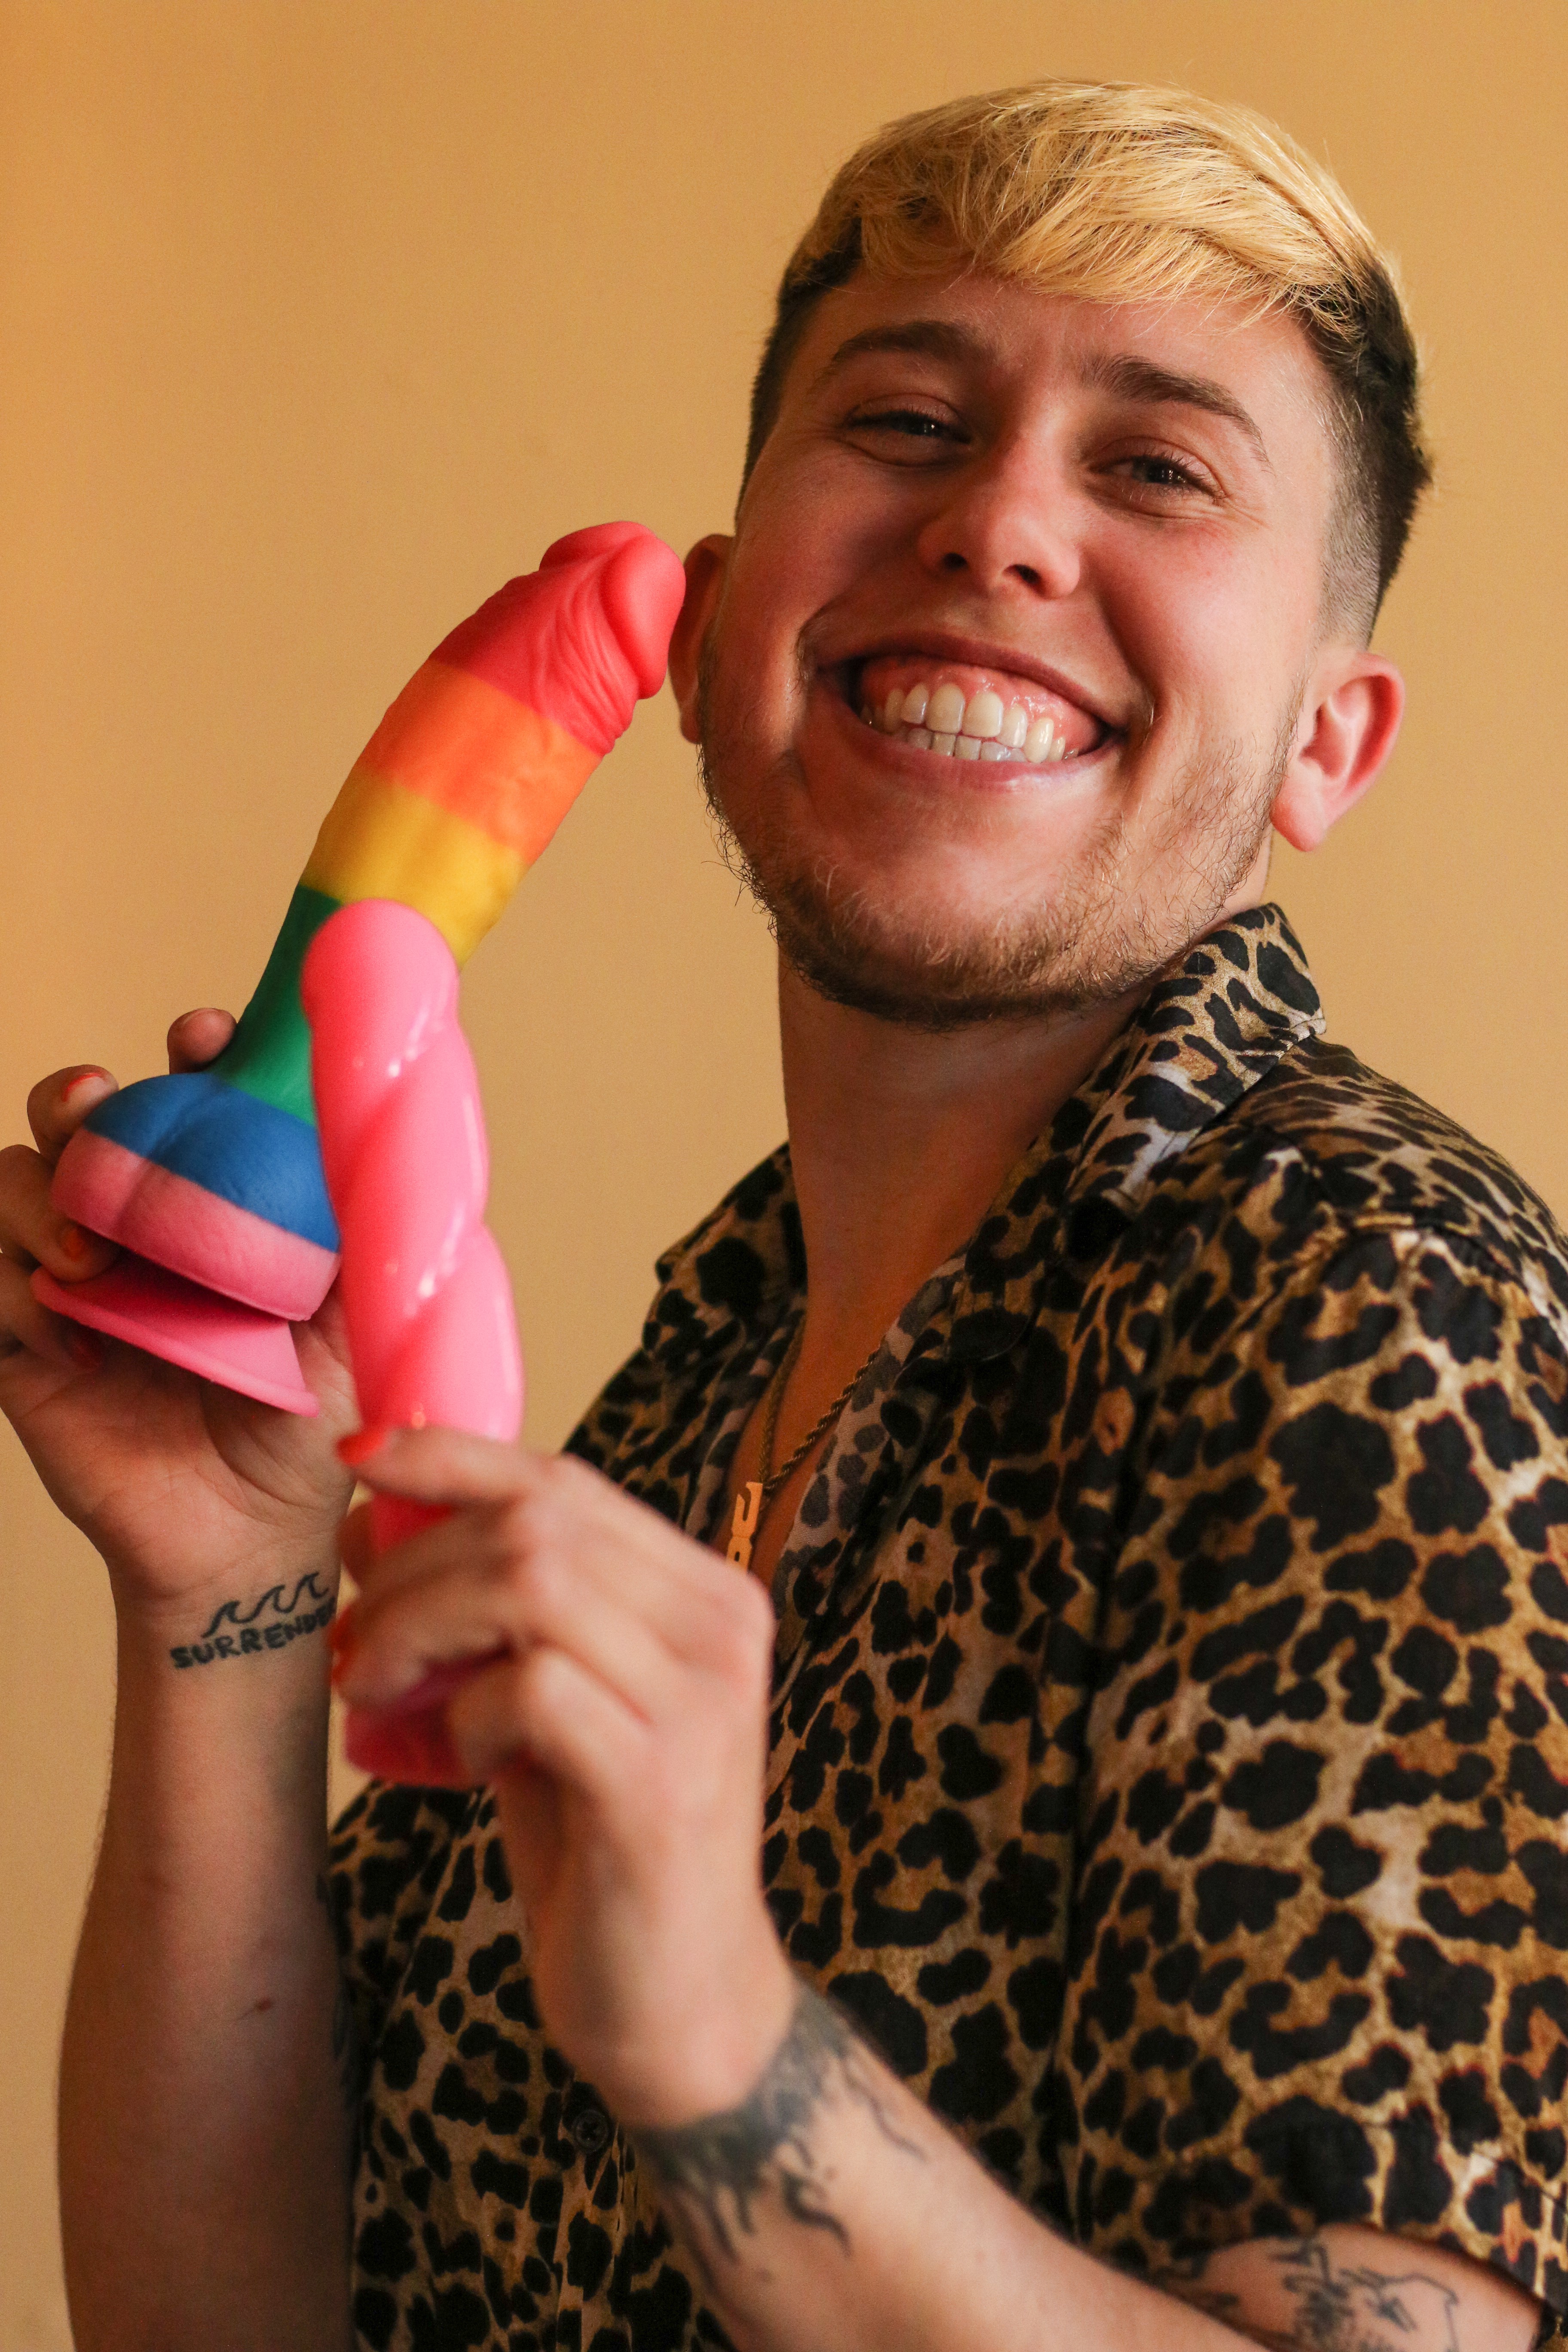 Jamie Joy smiling and holding a rainbow dildo